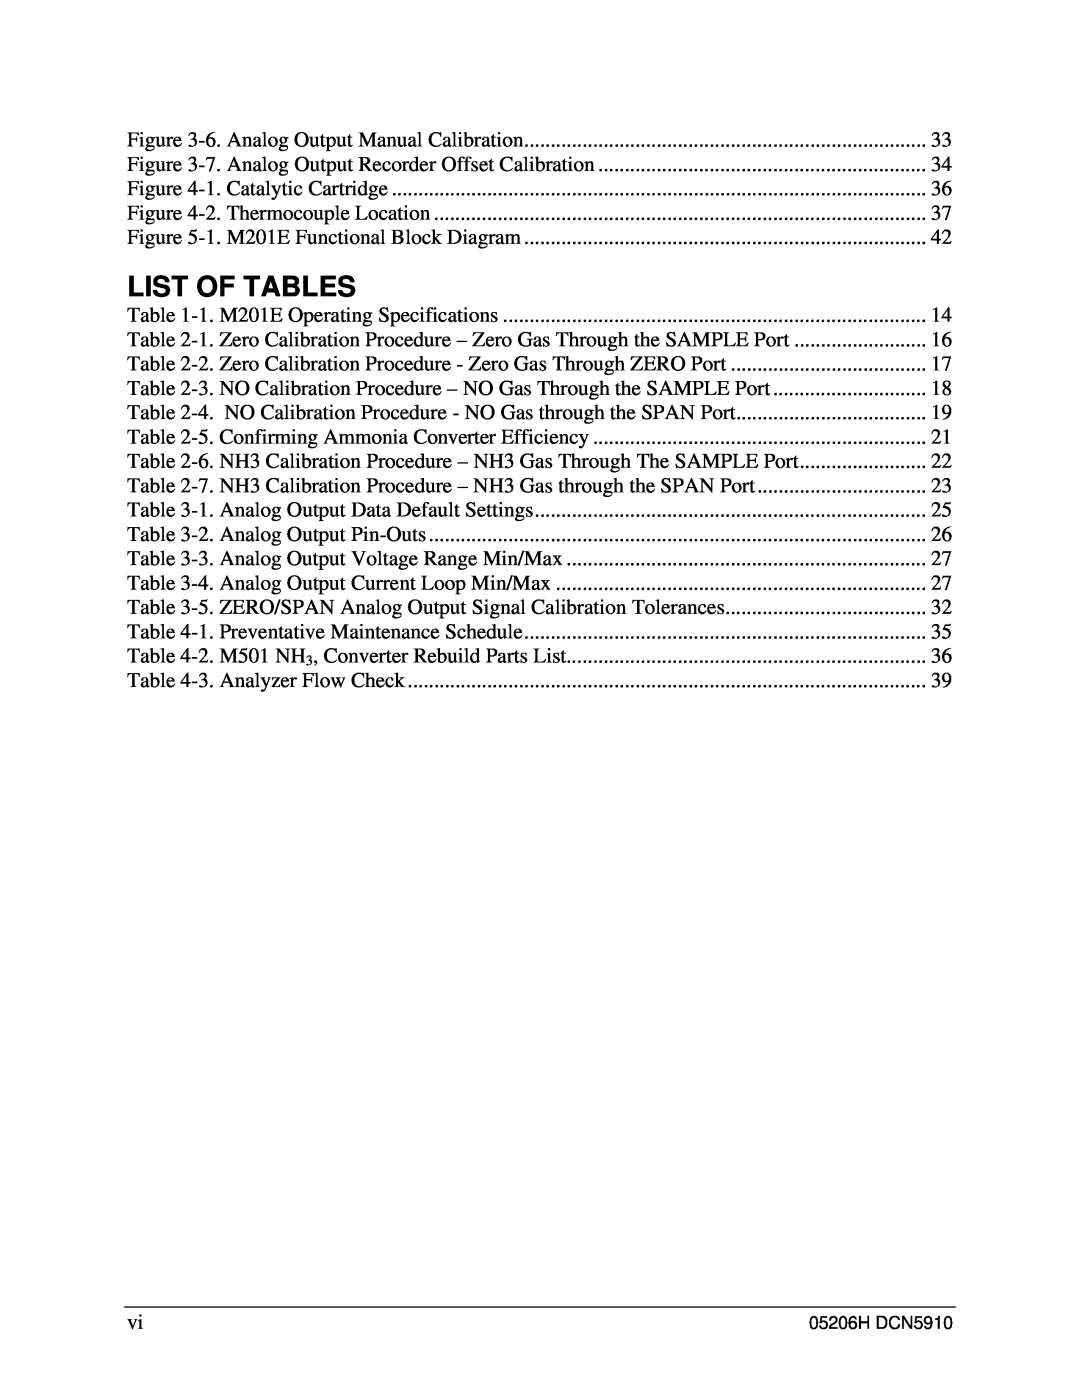 Teledyne M201E manual List Of Tables 